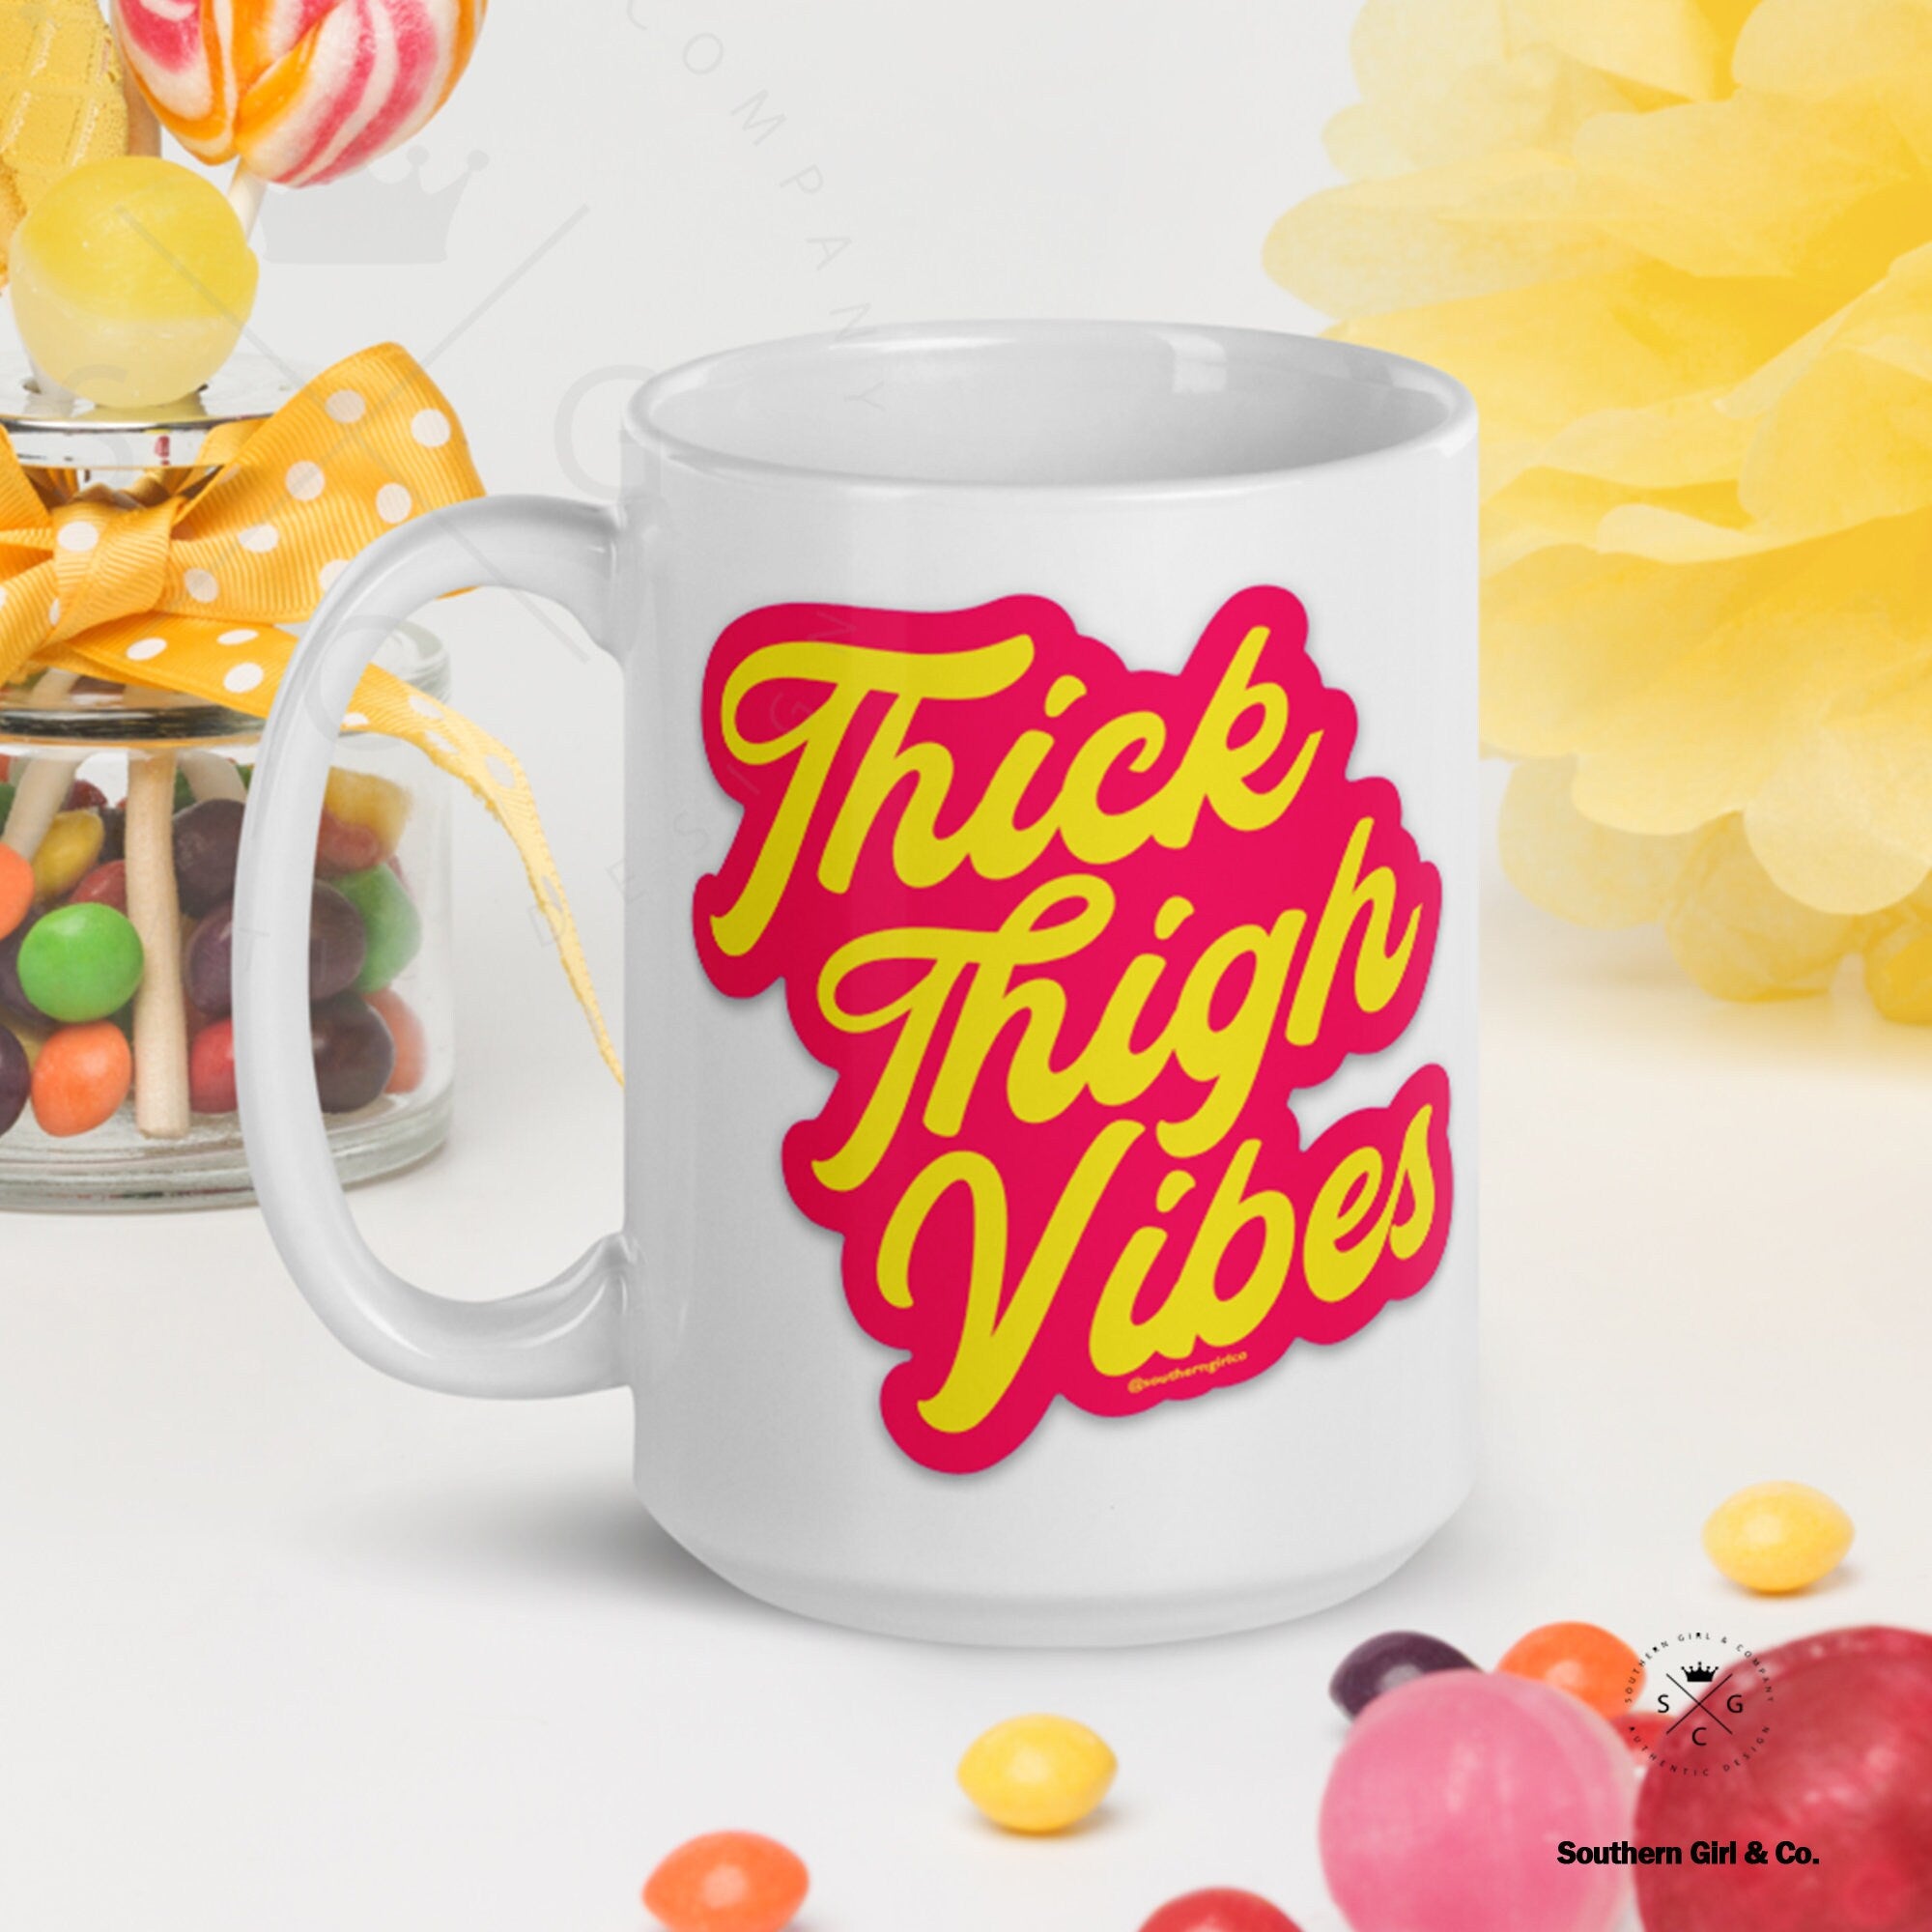 Thick Thigh Vibes Mug